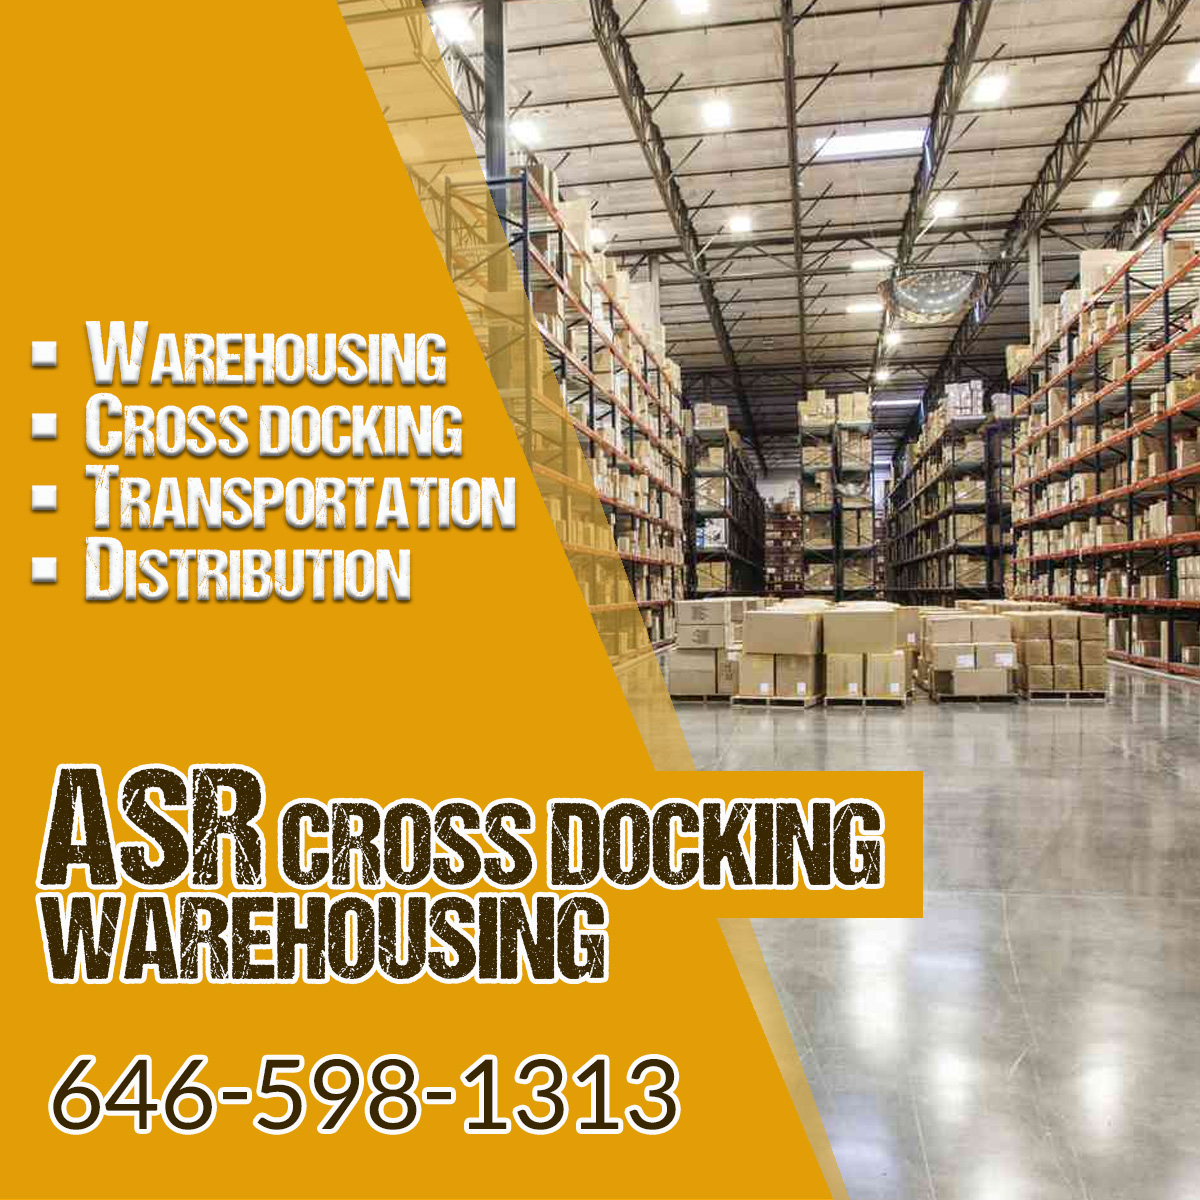 ASR Cross Docking and Warehousing